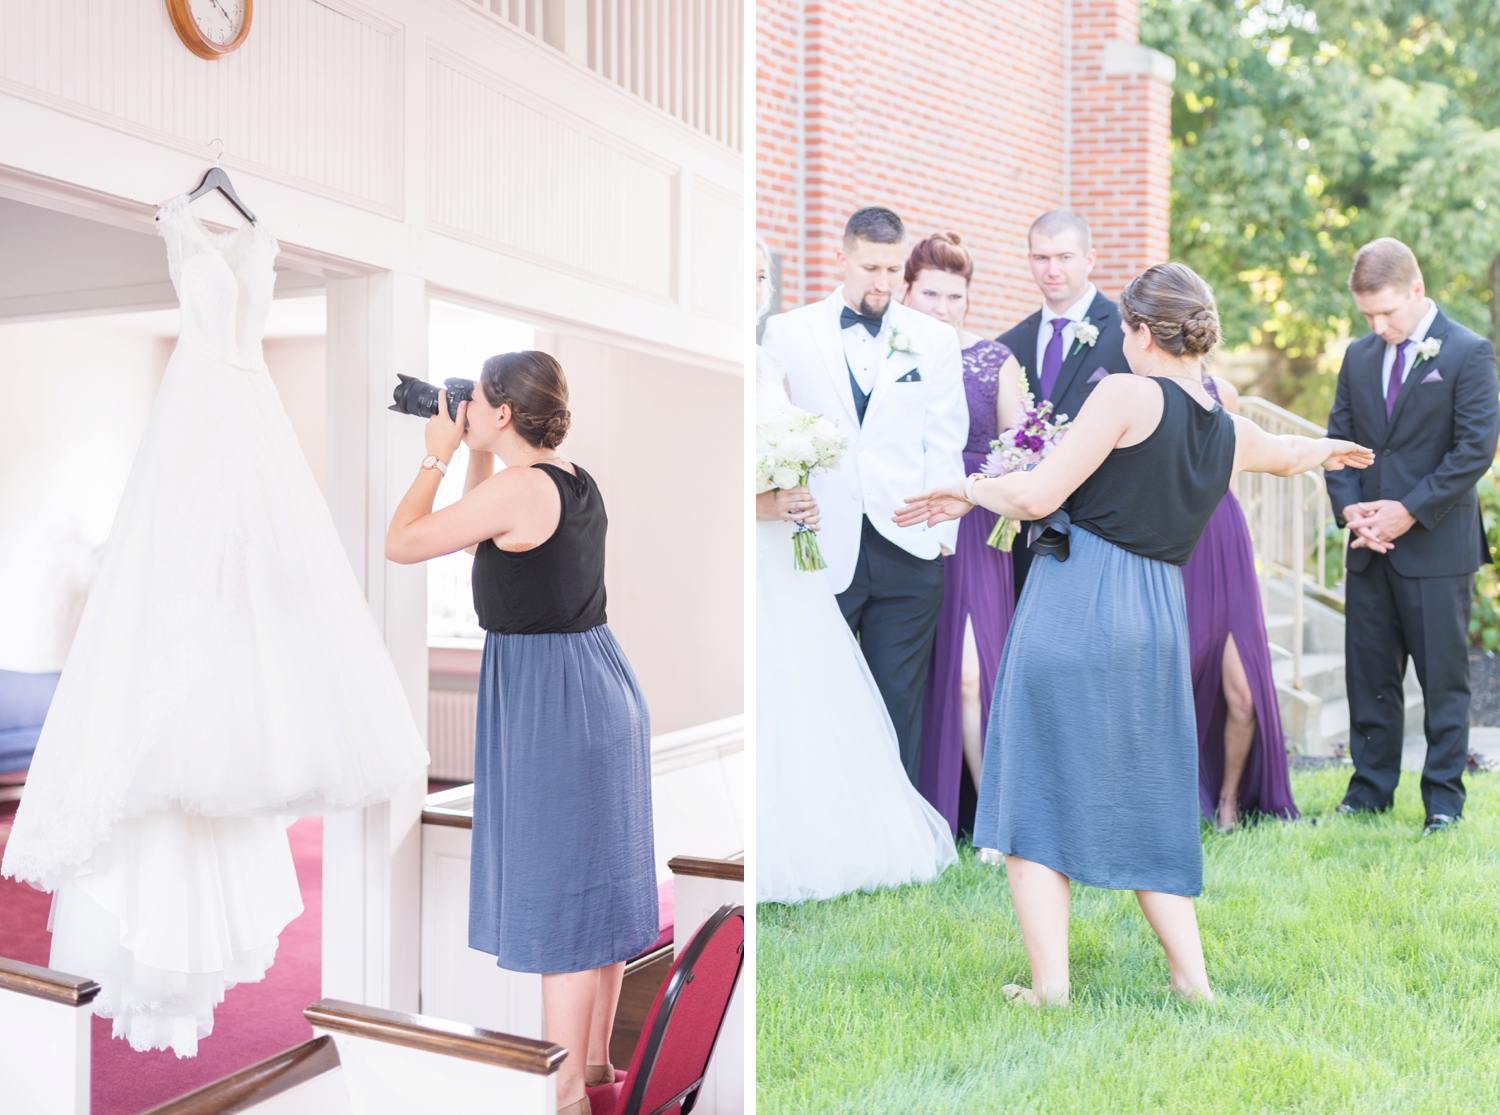 behind-the-scenes-of-a-wedding-photographer-stephanie-brann-photography_0130